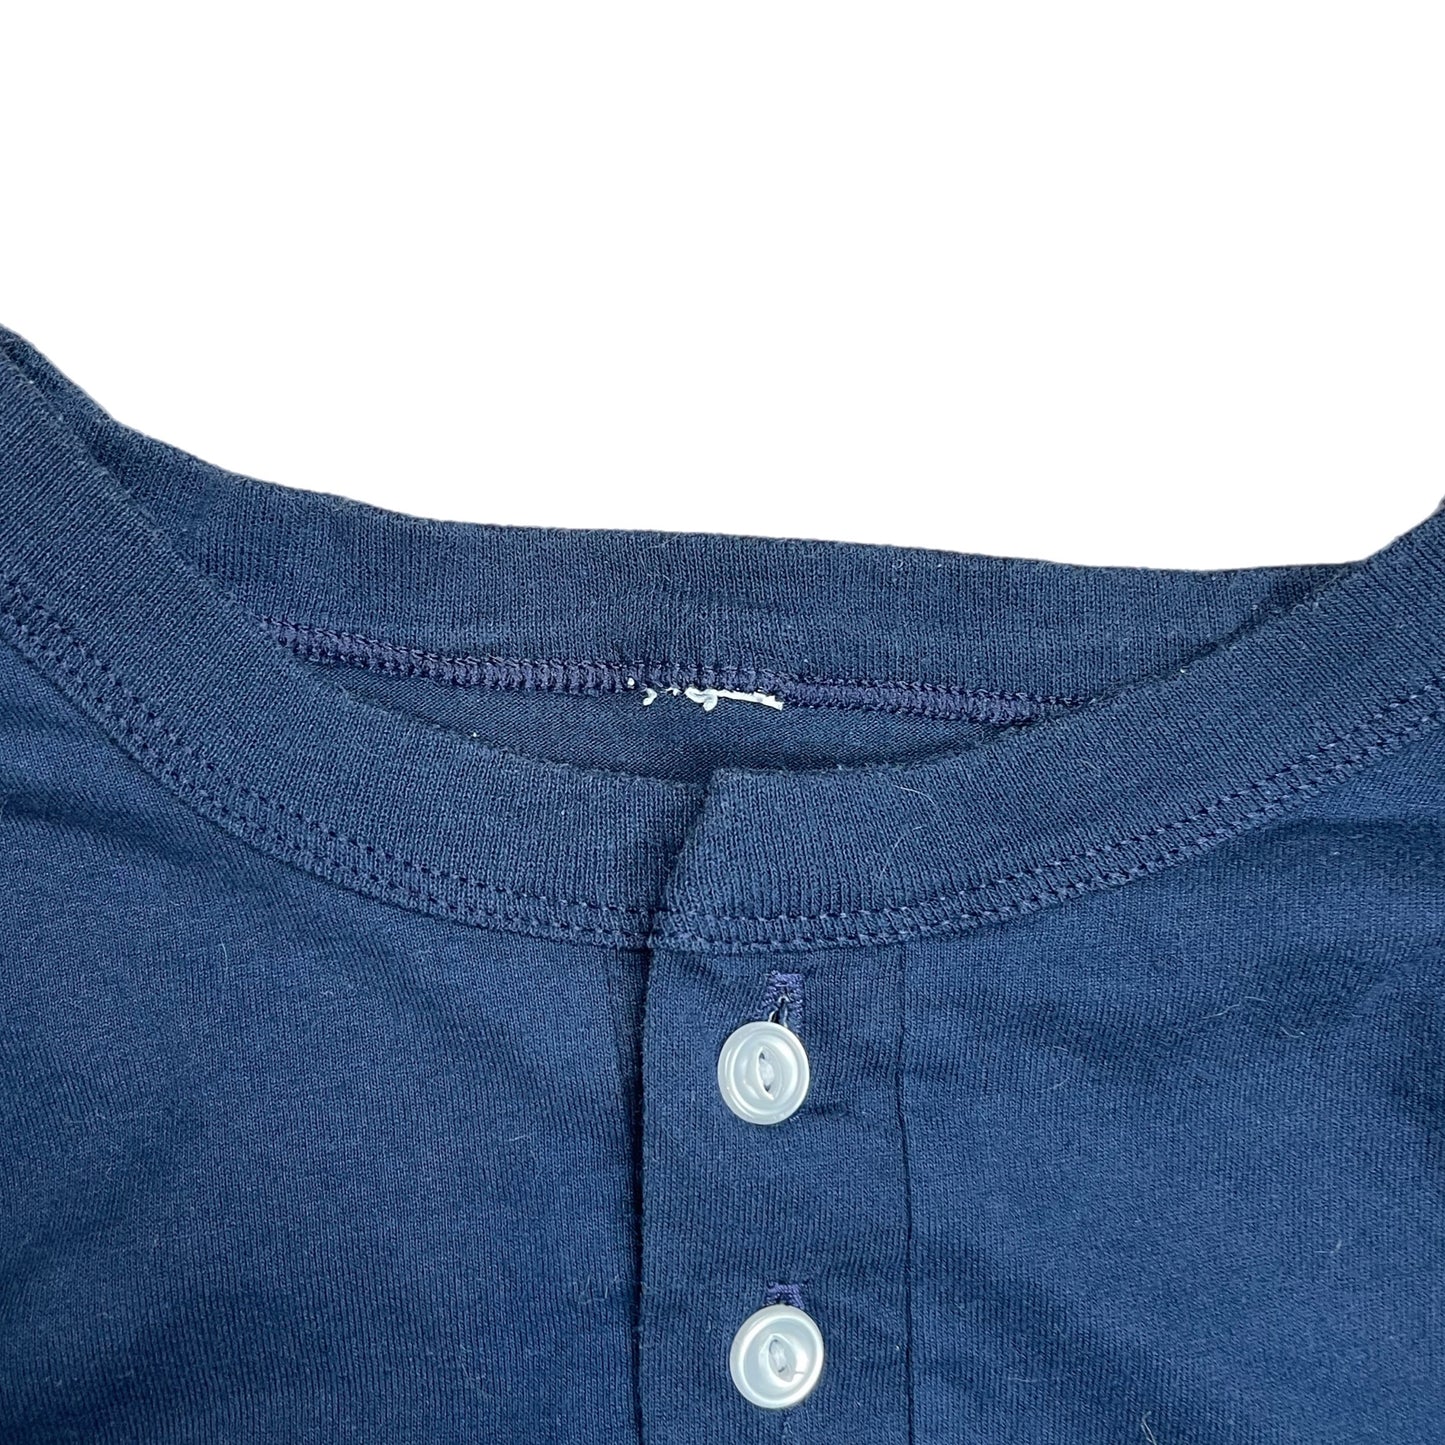 Vintage 1997 Astros Shirt - L/XL